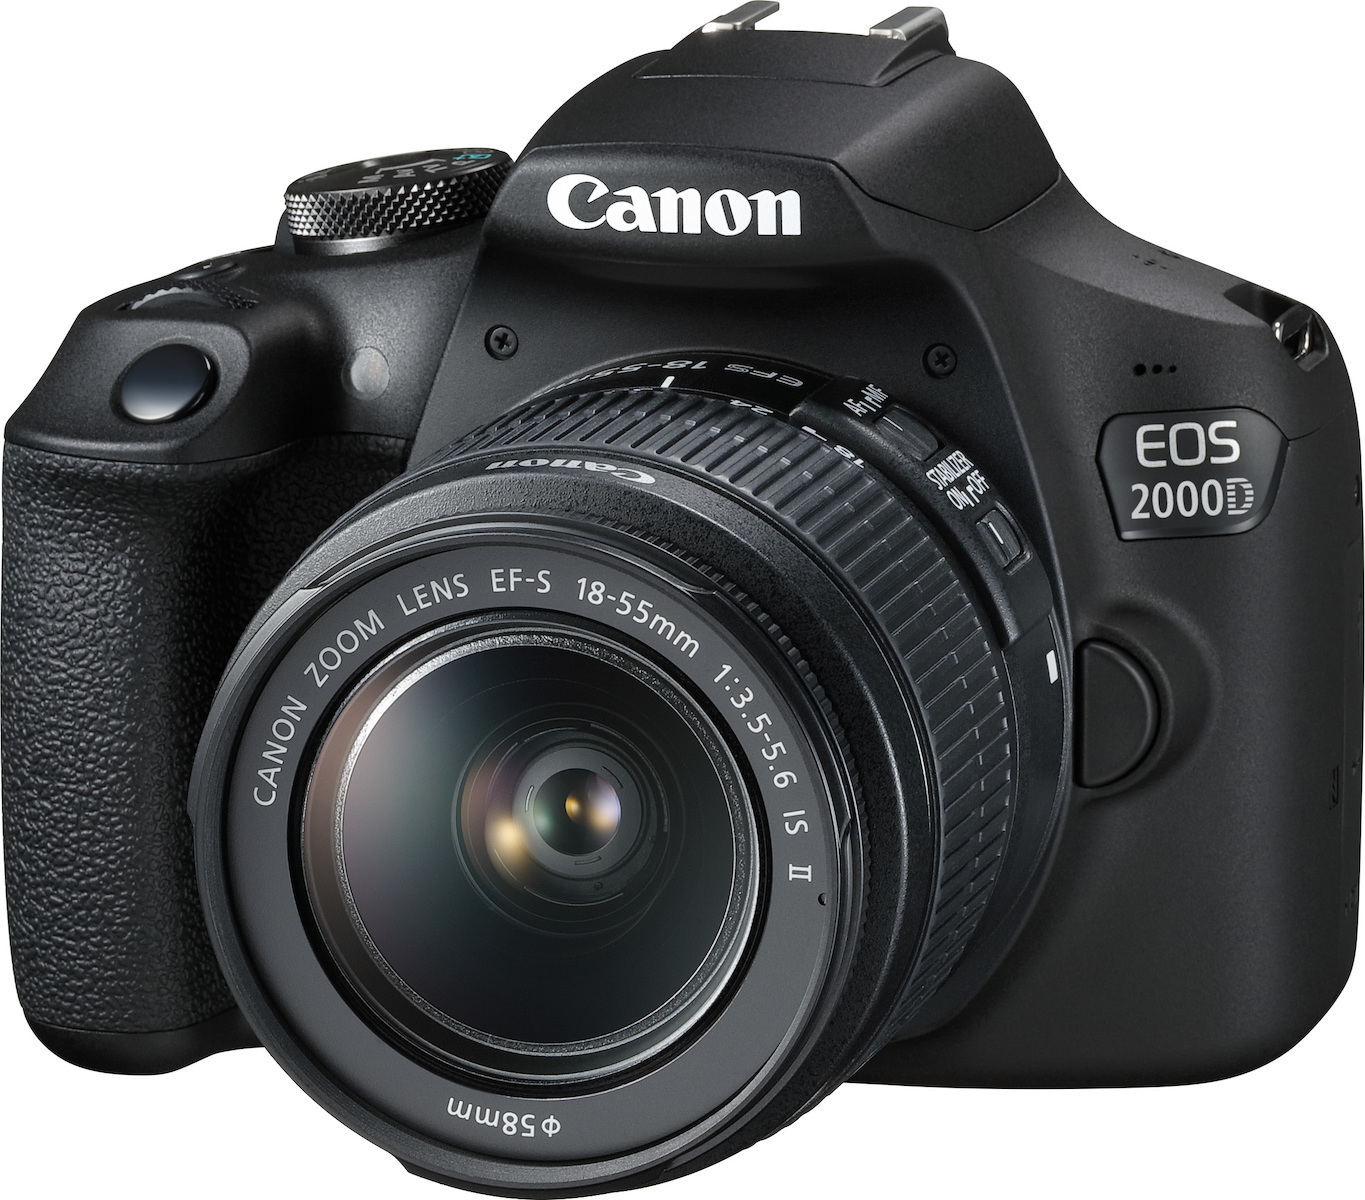  Canon EOS 2000D  Kit EF S 18 55mm IS II Black Skroutz gr